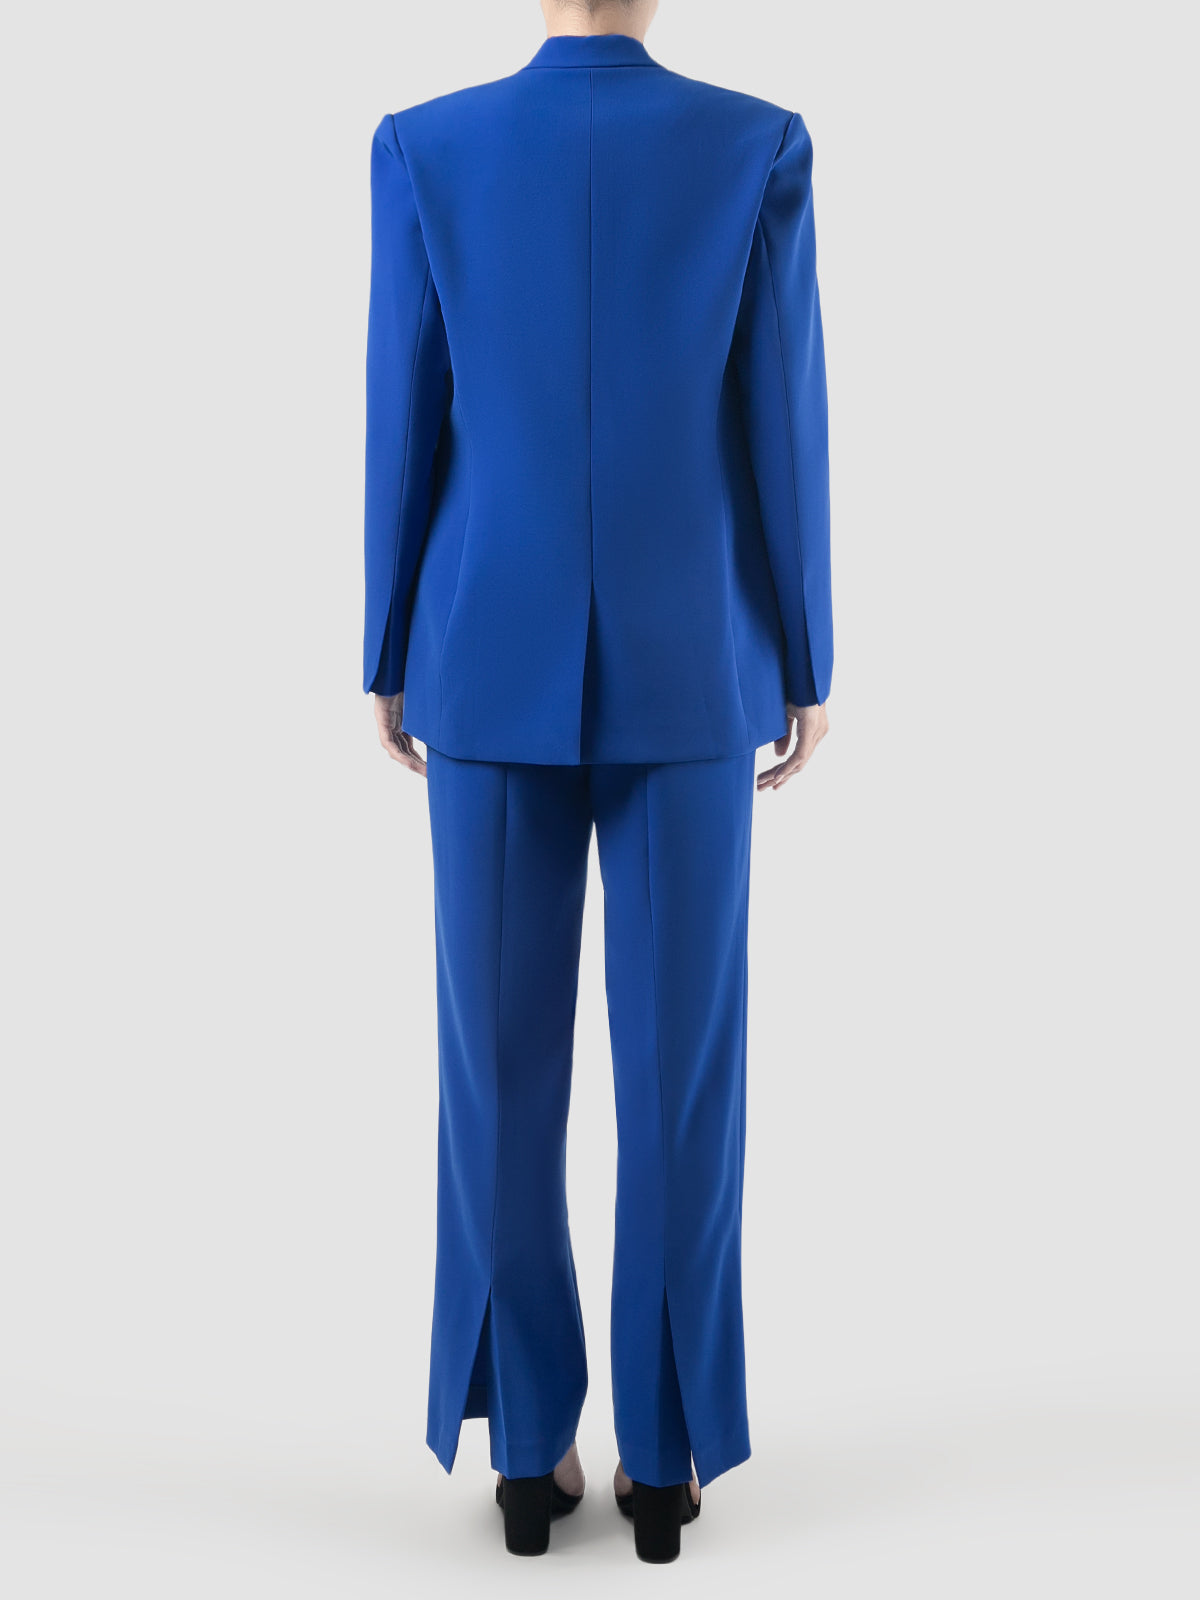 Buy Fablestreet Blue Trousers for Women's Online @ Tata CLiQ